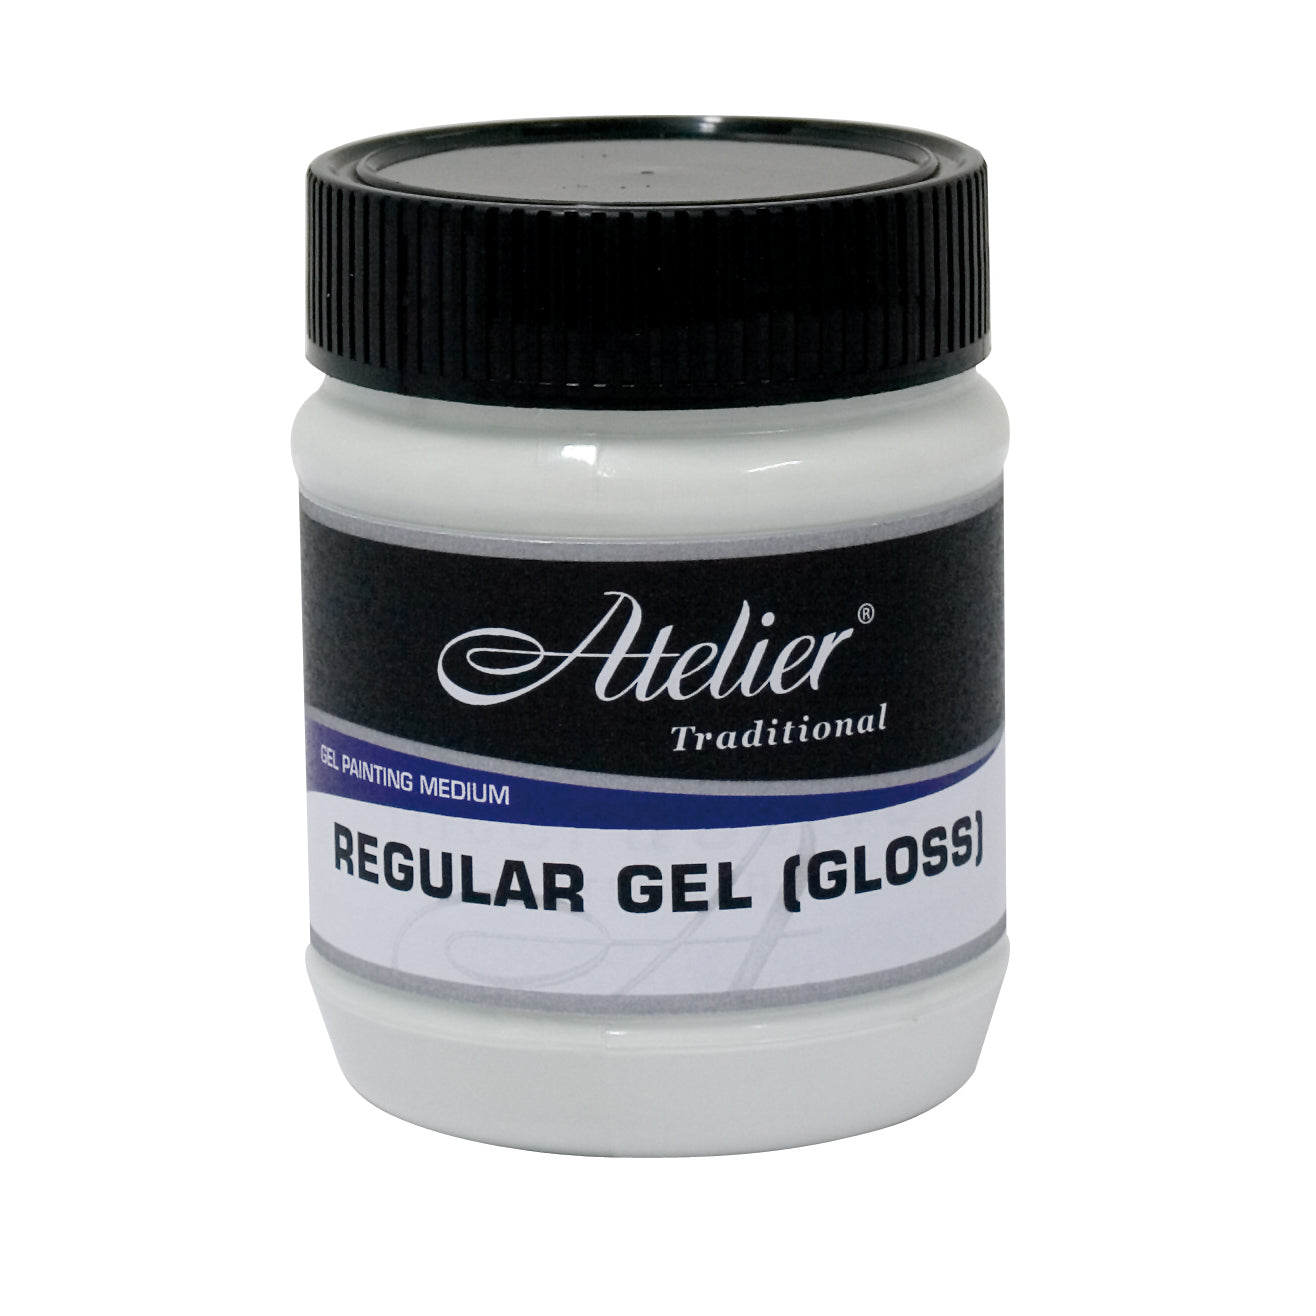 Atelier Traditional Regular Gel (Gloss)